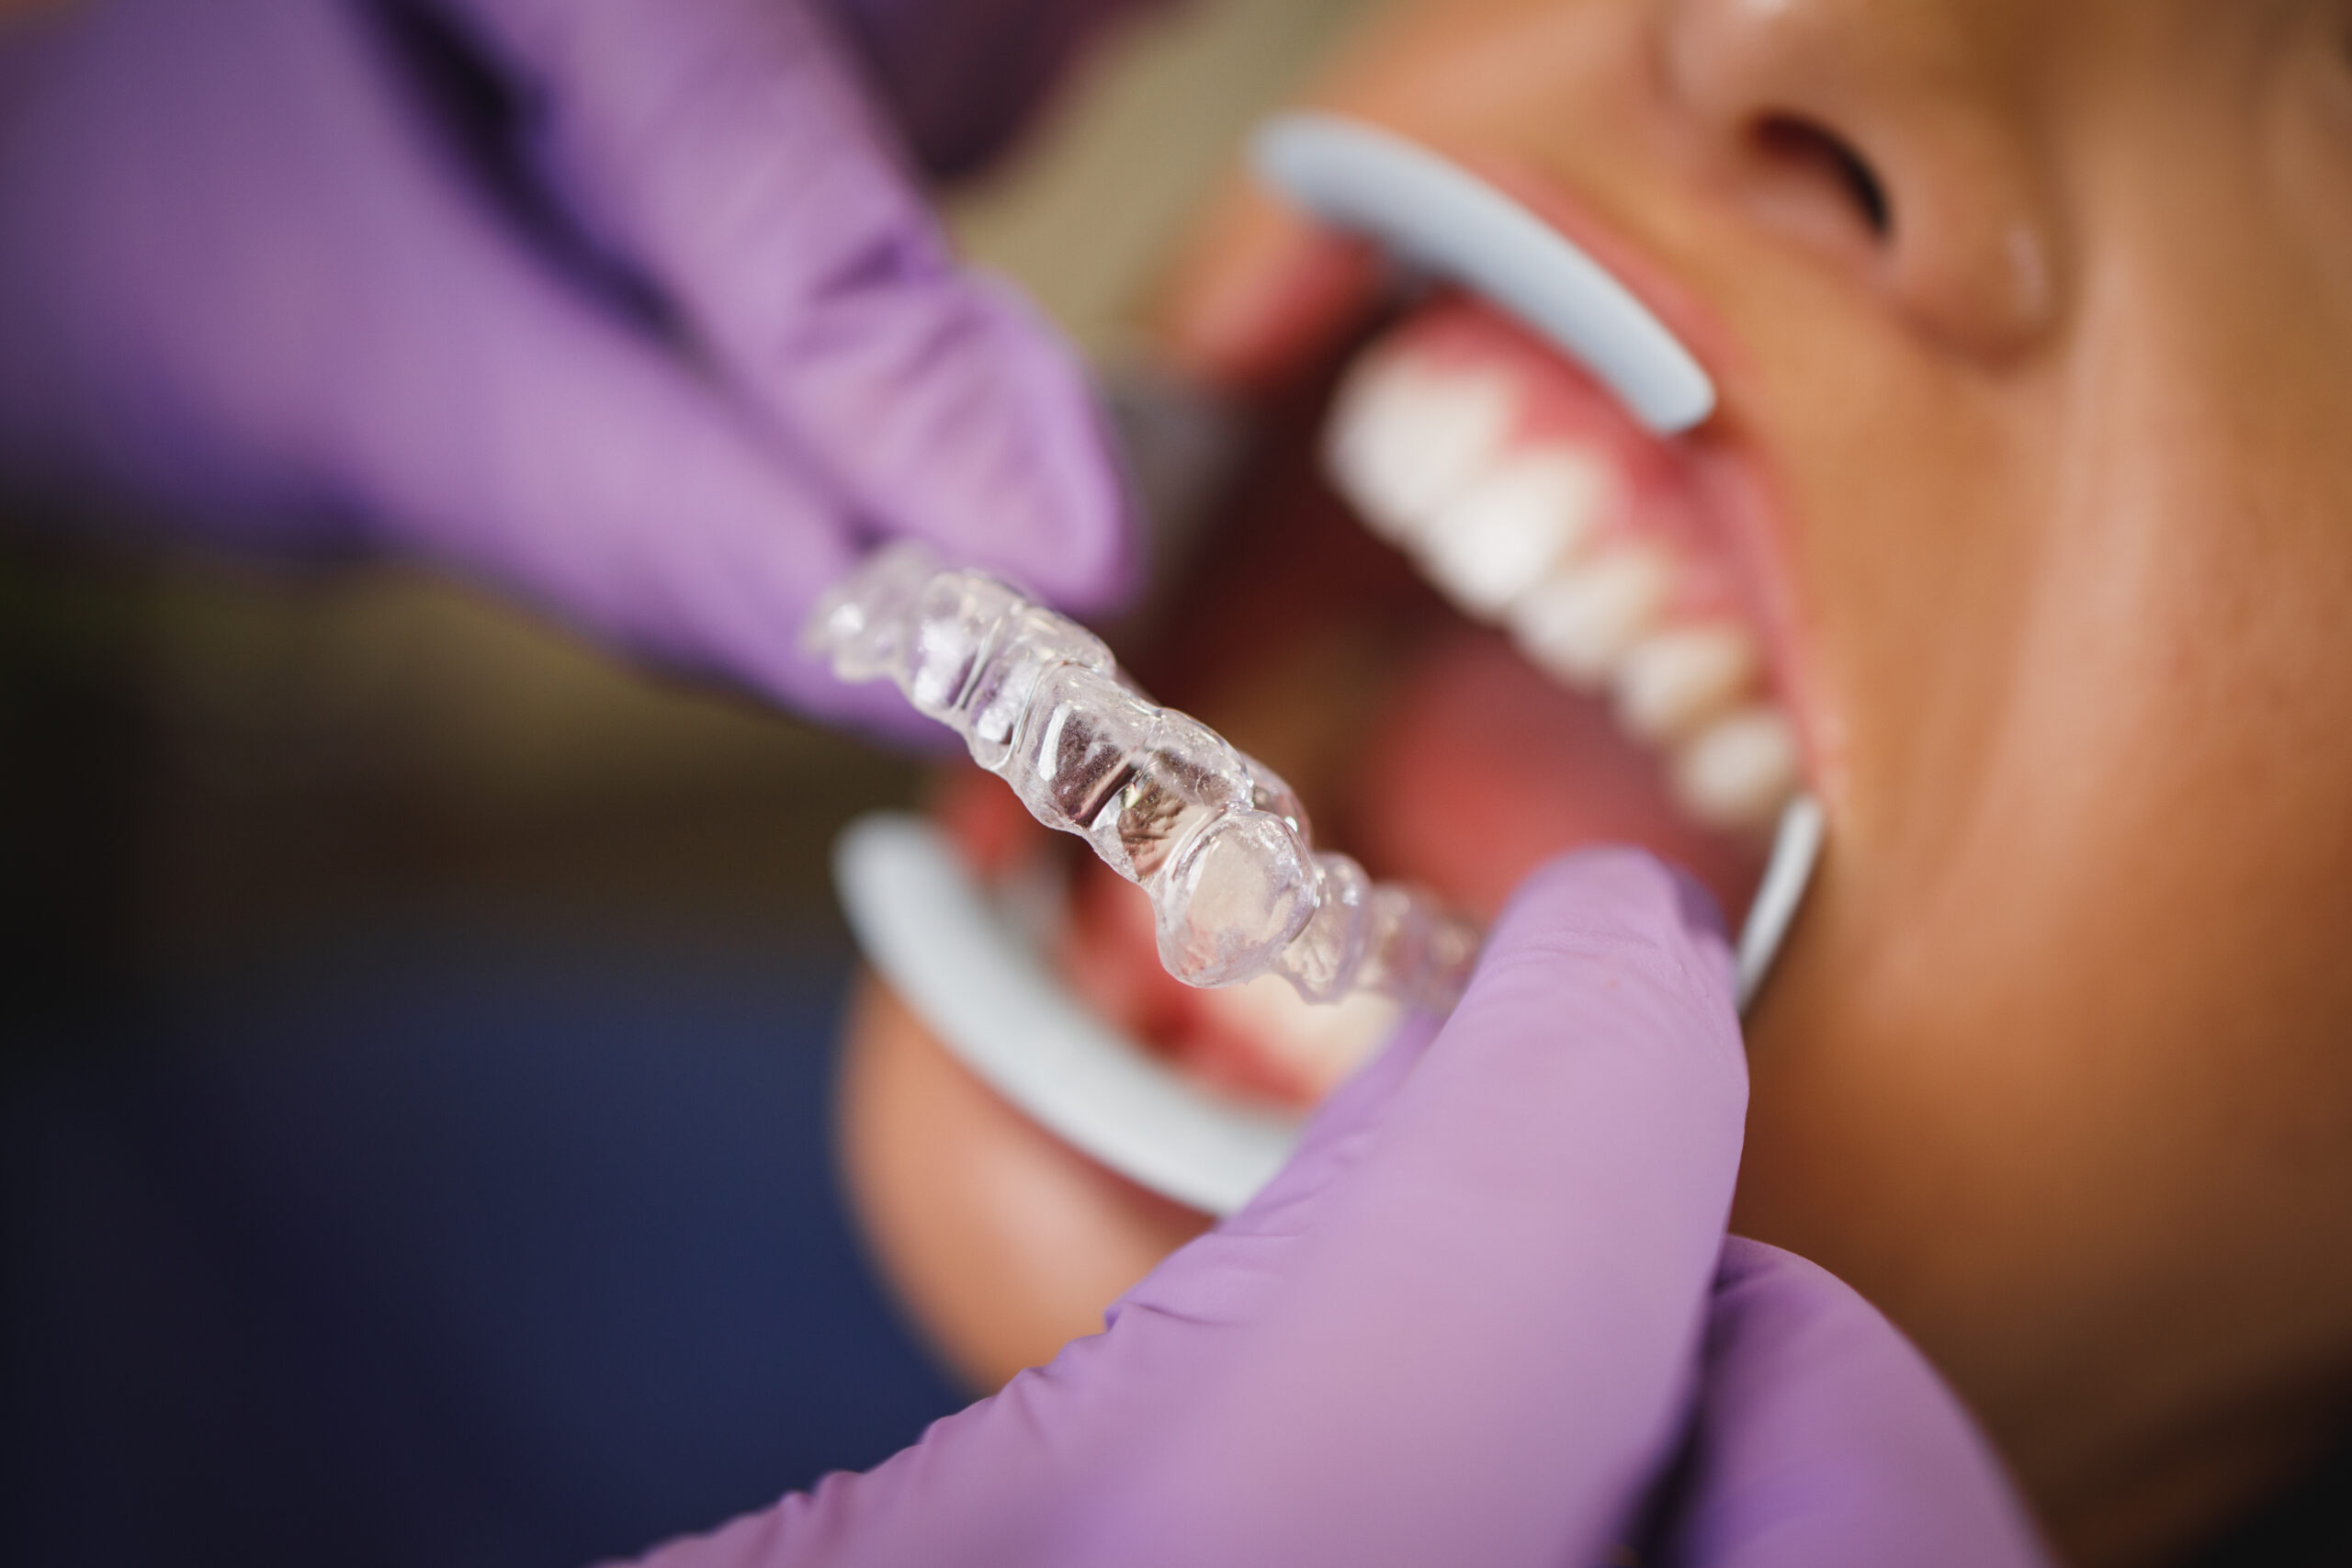 dentist placing invisalign teeth aligners